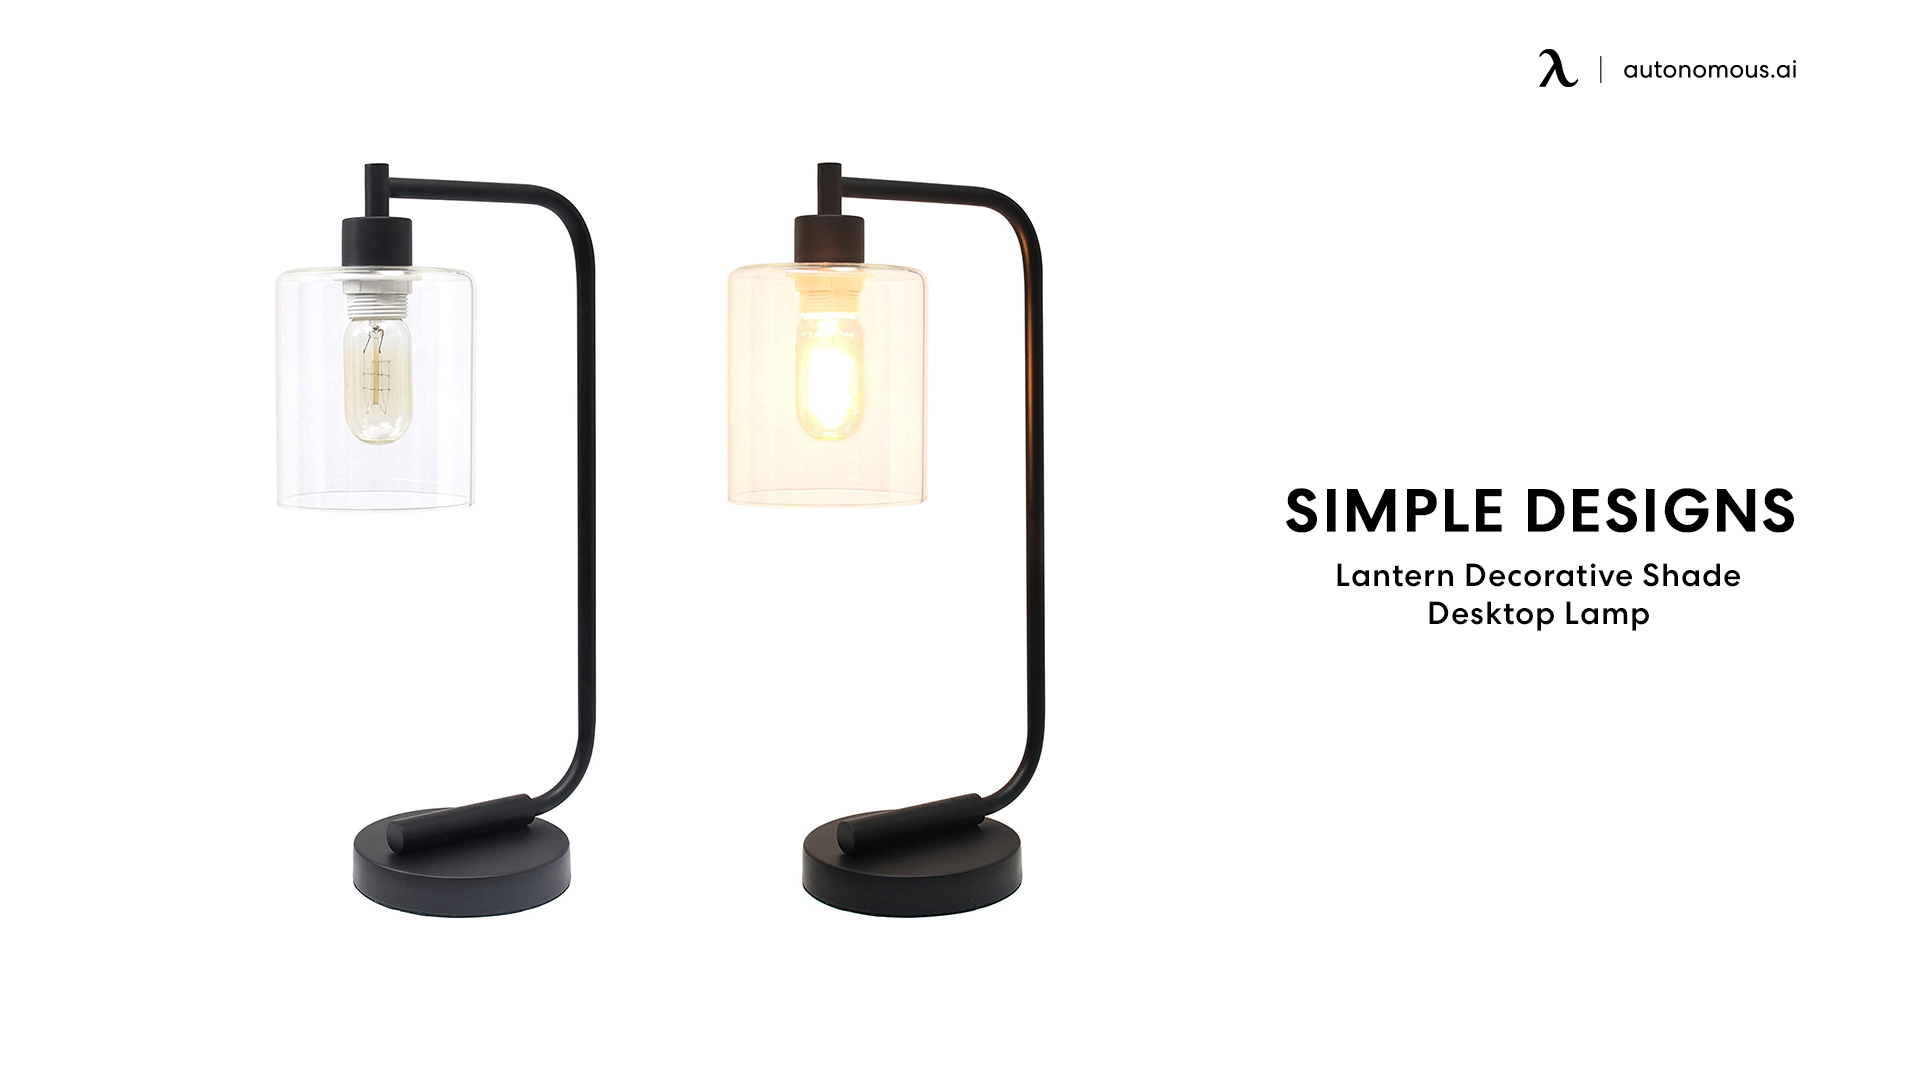 Simple Designs Lantern Decorative Shade Desktop Lamp